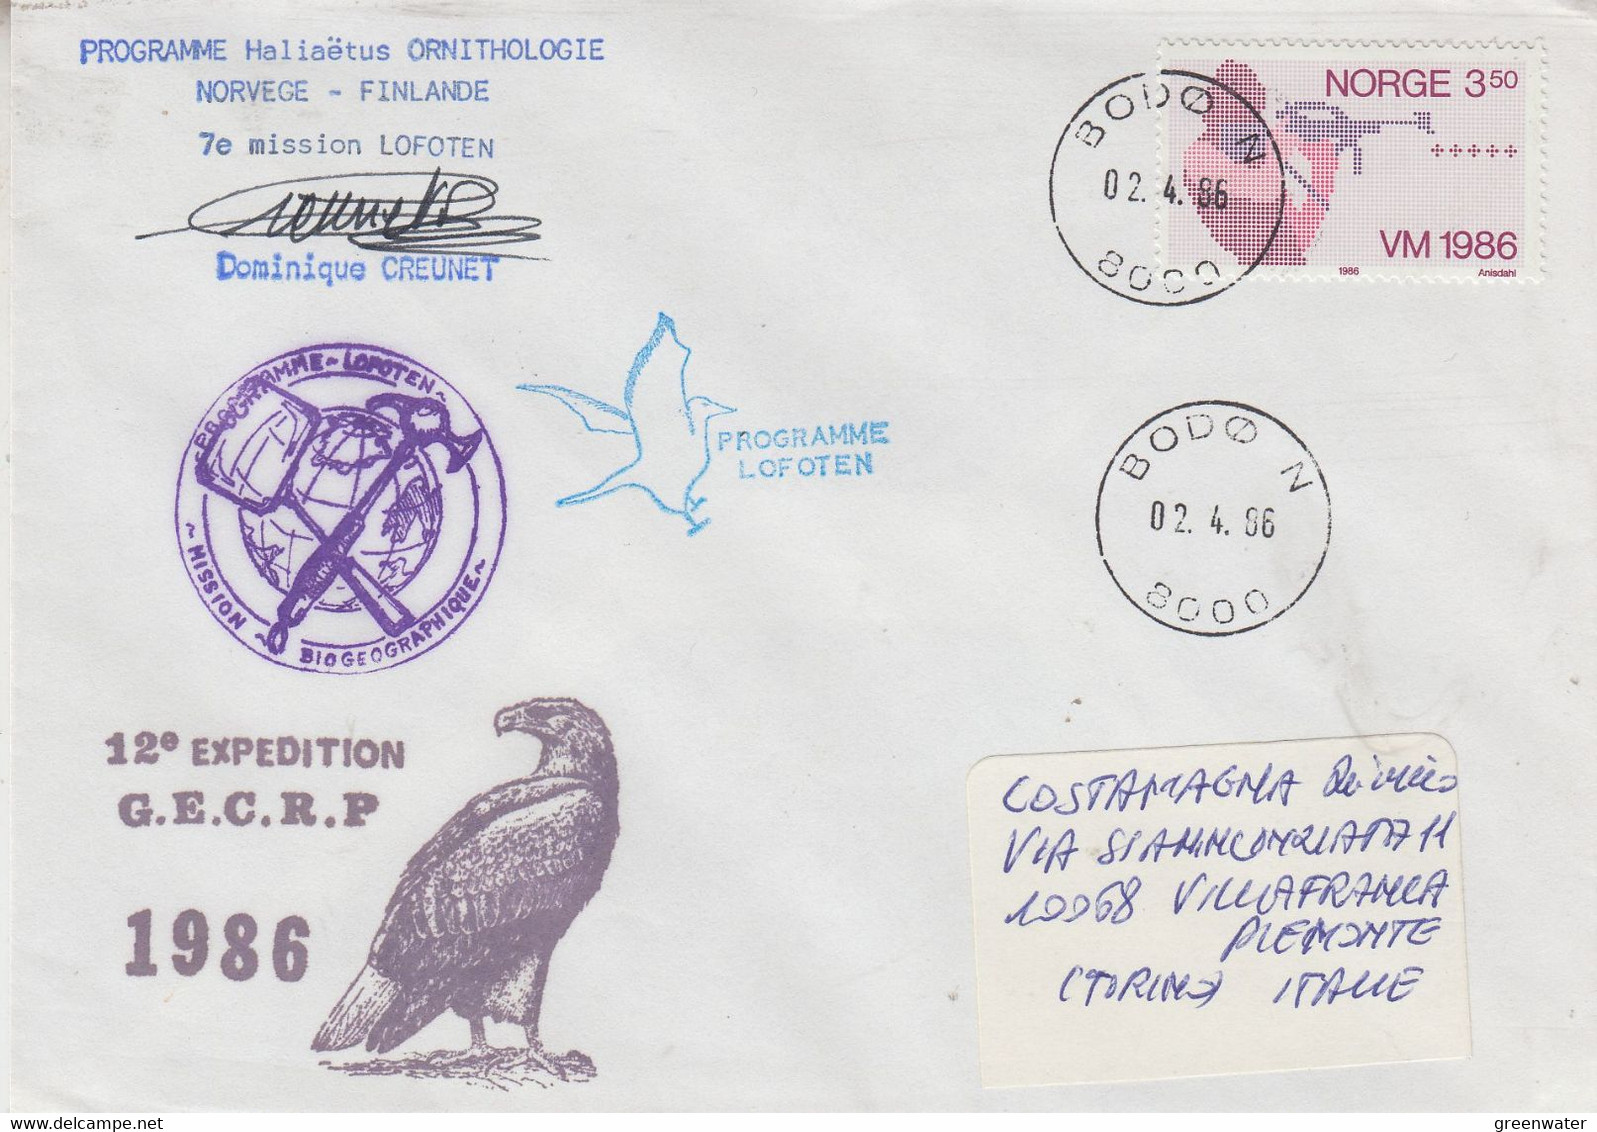 Norway 1986 7e Mission Lofoten Signature Ca Bodo 02-4-1986 (58152) - Programmes Scientifiques